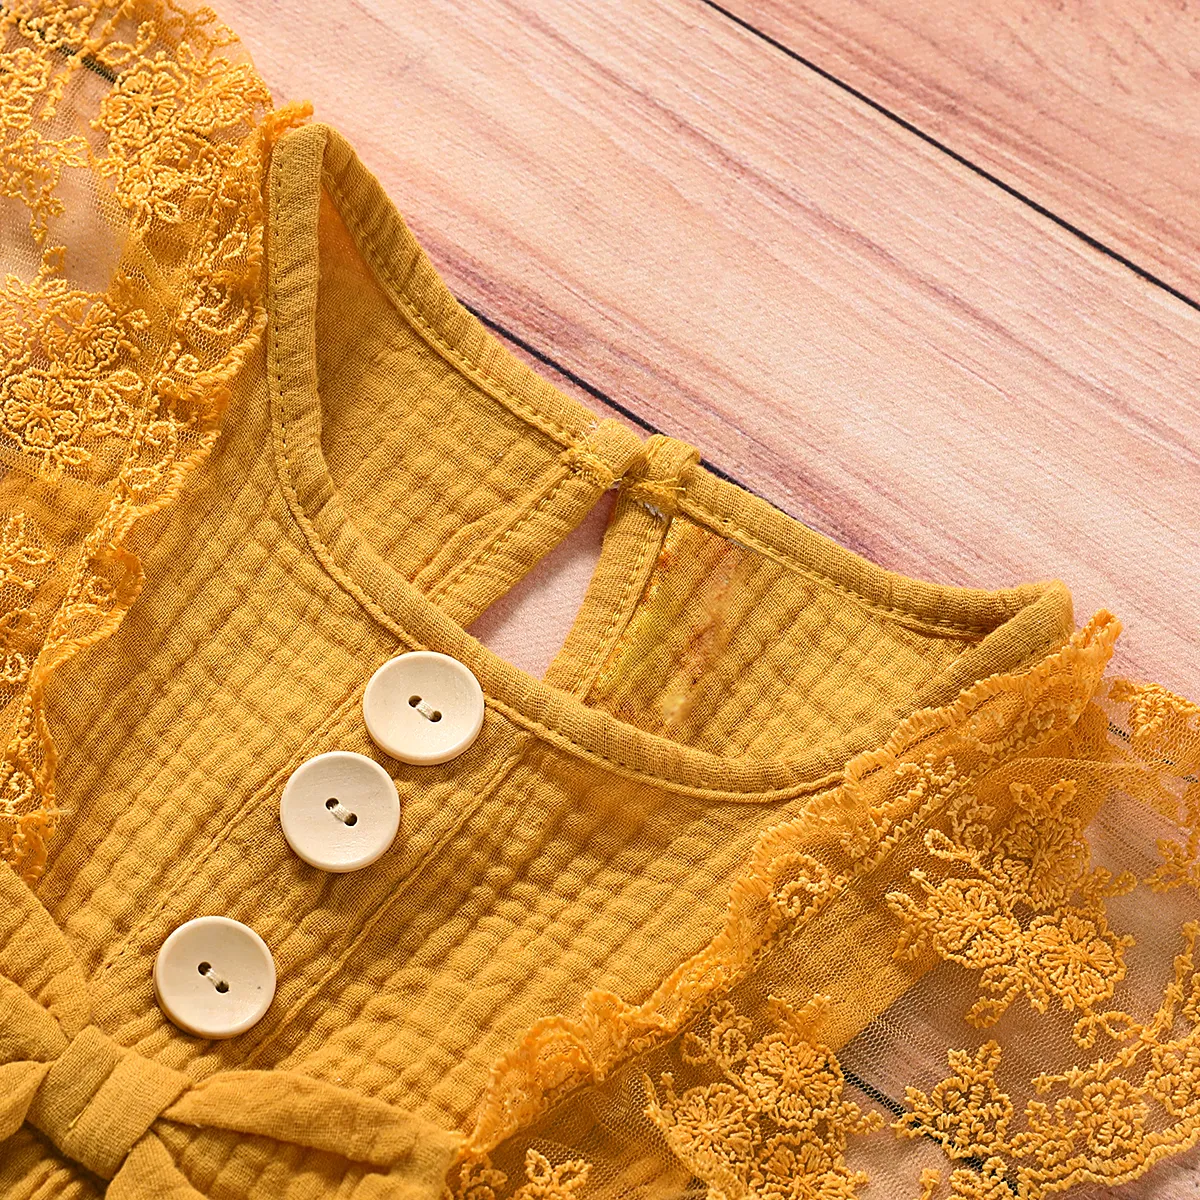 Baby Girl 95% Cotton Crepe Sleeveless Lace Bowknot Button Dress Yellow big image 1